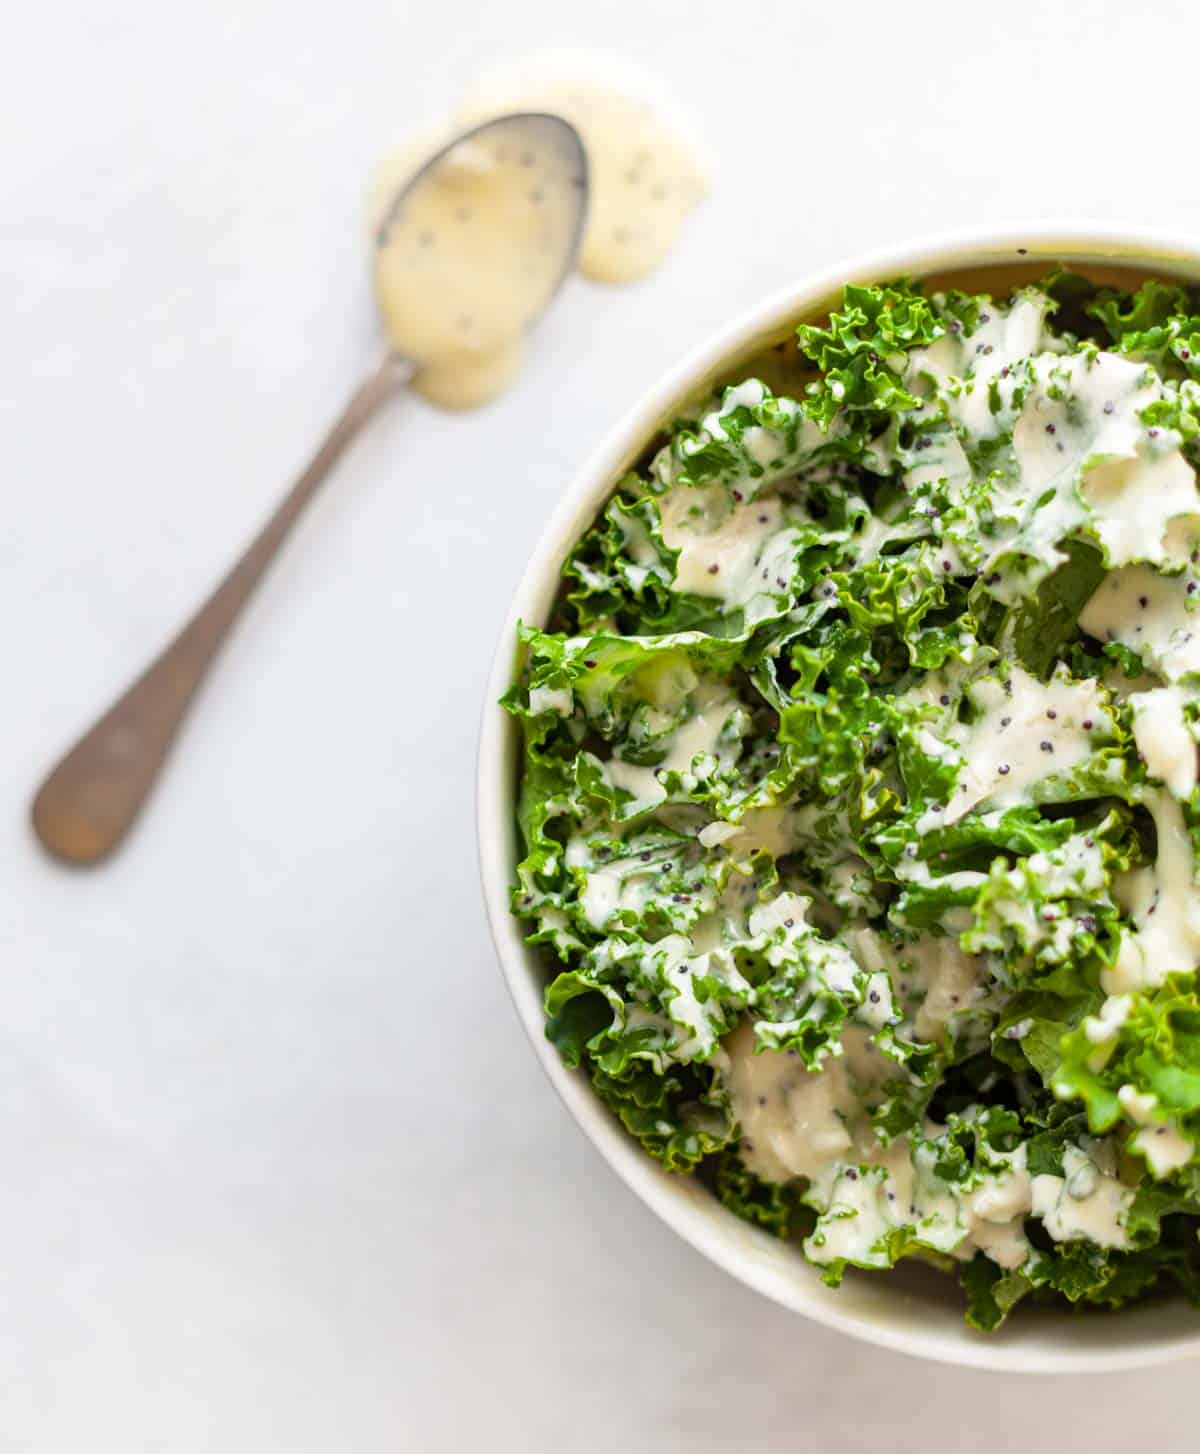 creamy poppyseed dressing on a kale salad